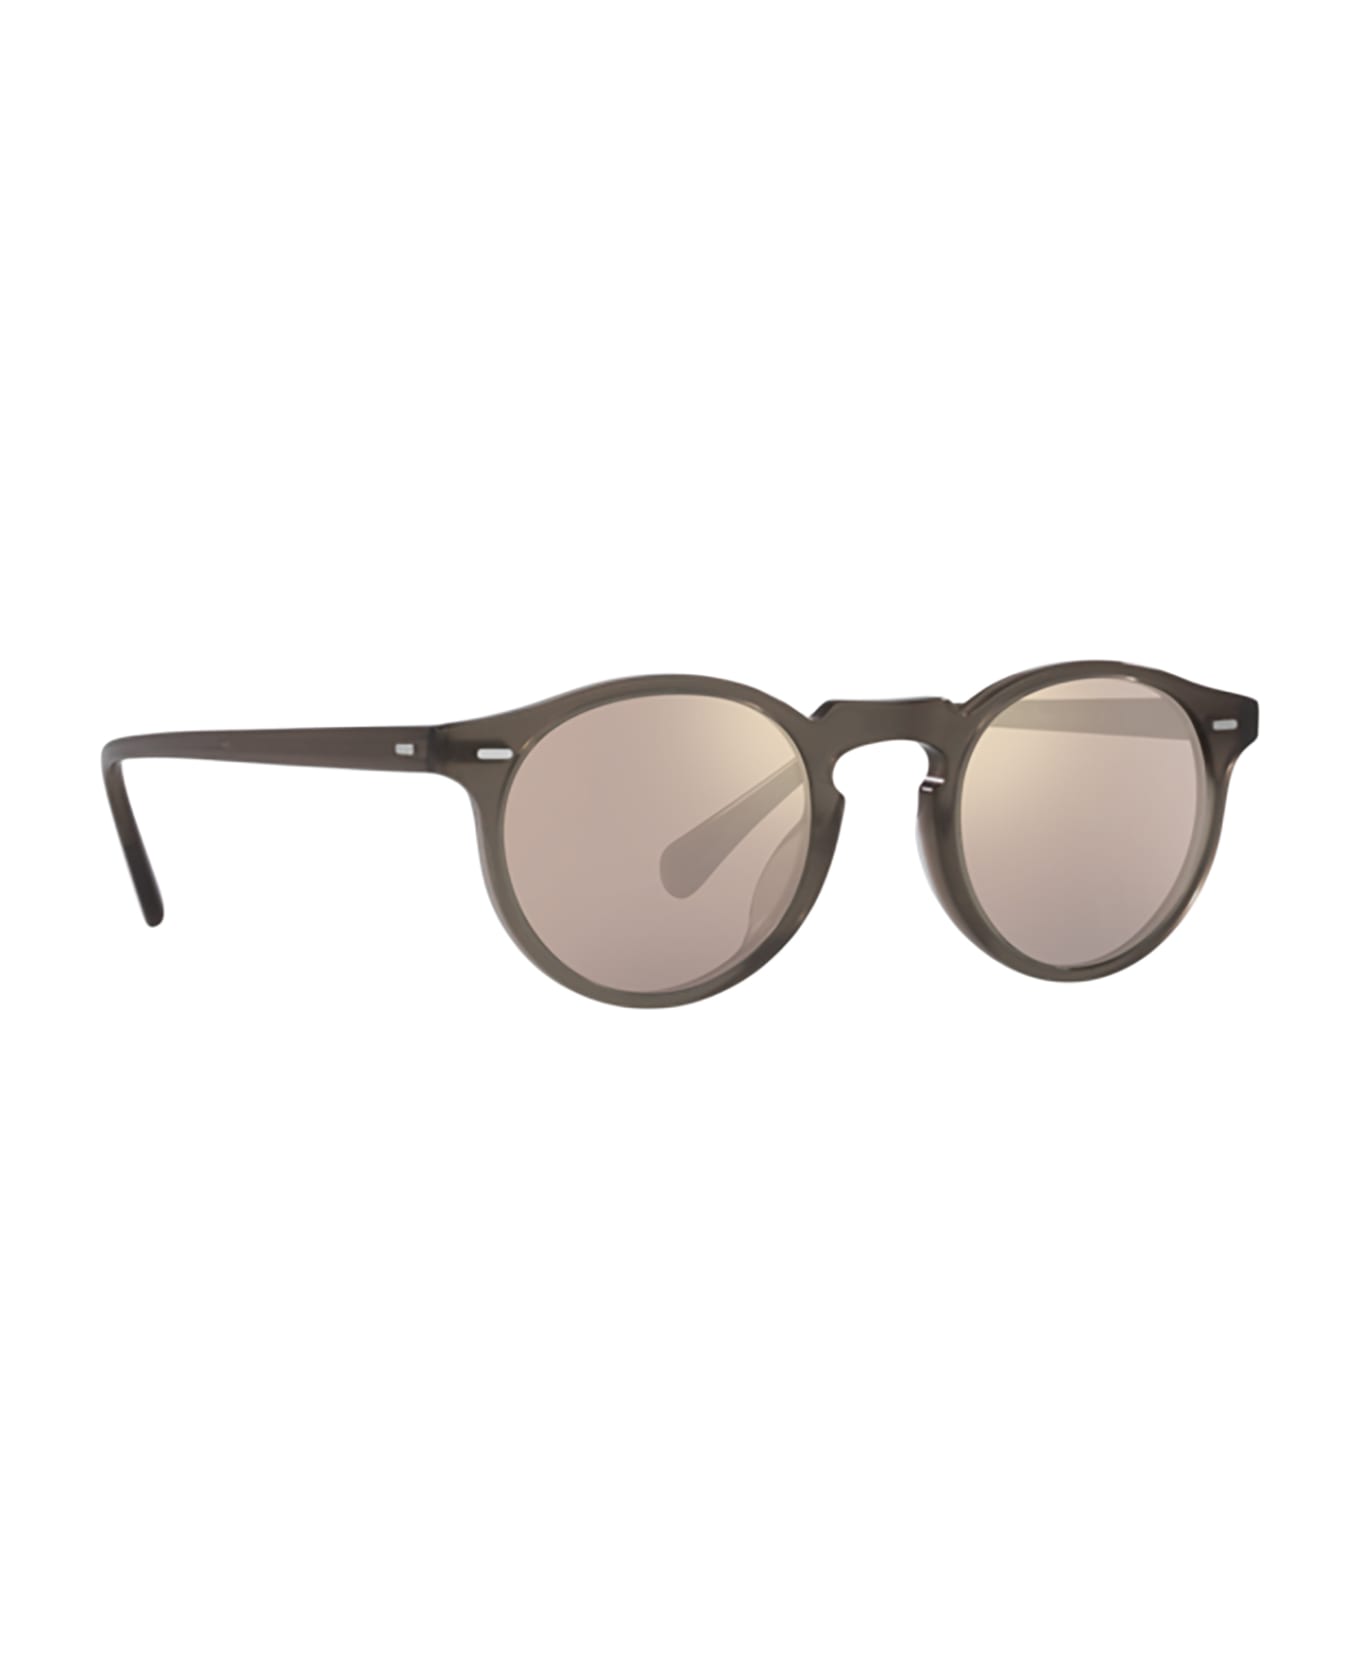 Oliver Peoples Ov5217s Taupe Sunglasses - Taupe